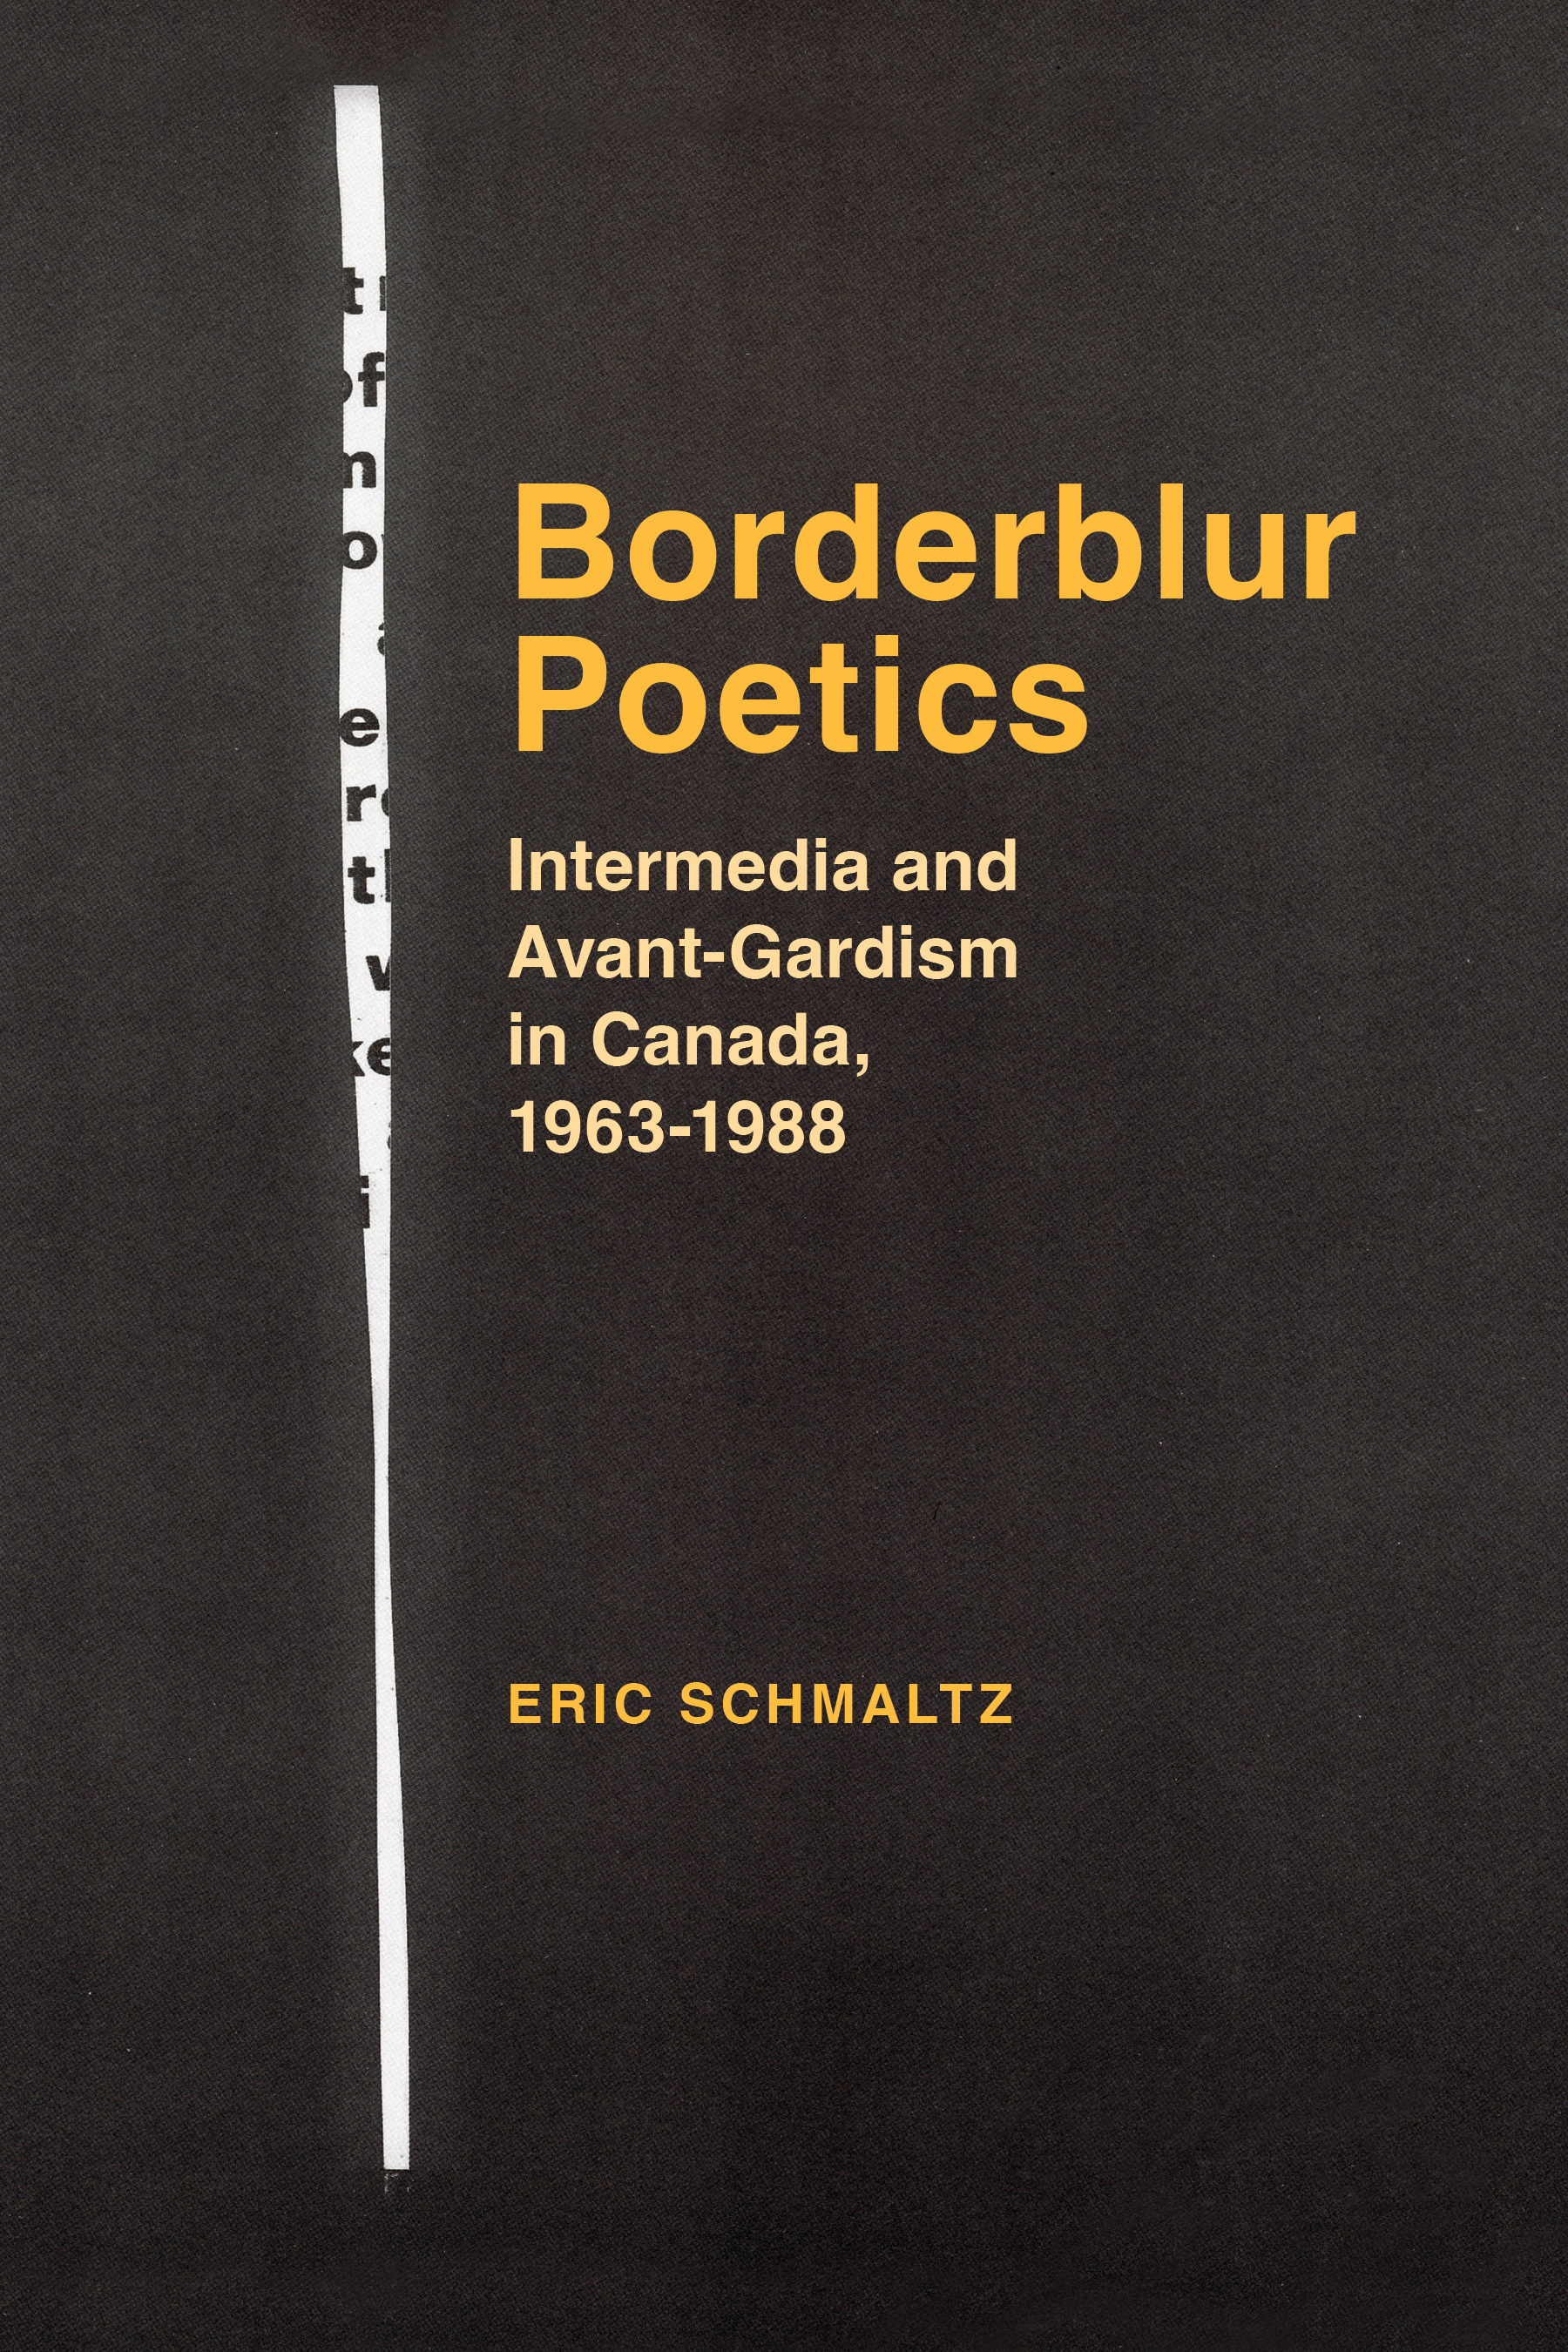 Cover Image for: Borderblur Poetics